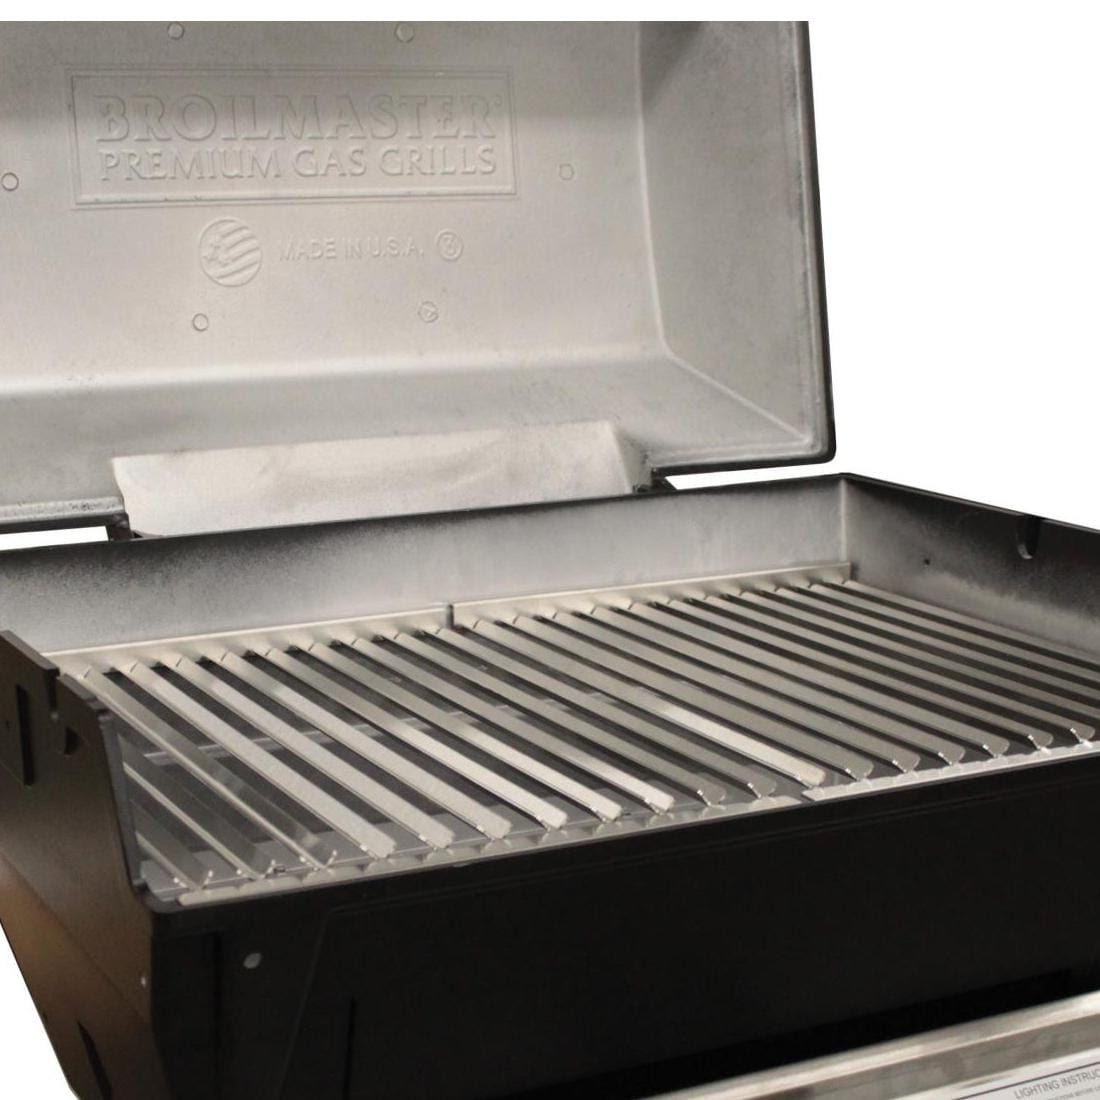 Broilmaster P4 Premium Gas Grill - grillsNmore.com